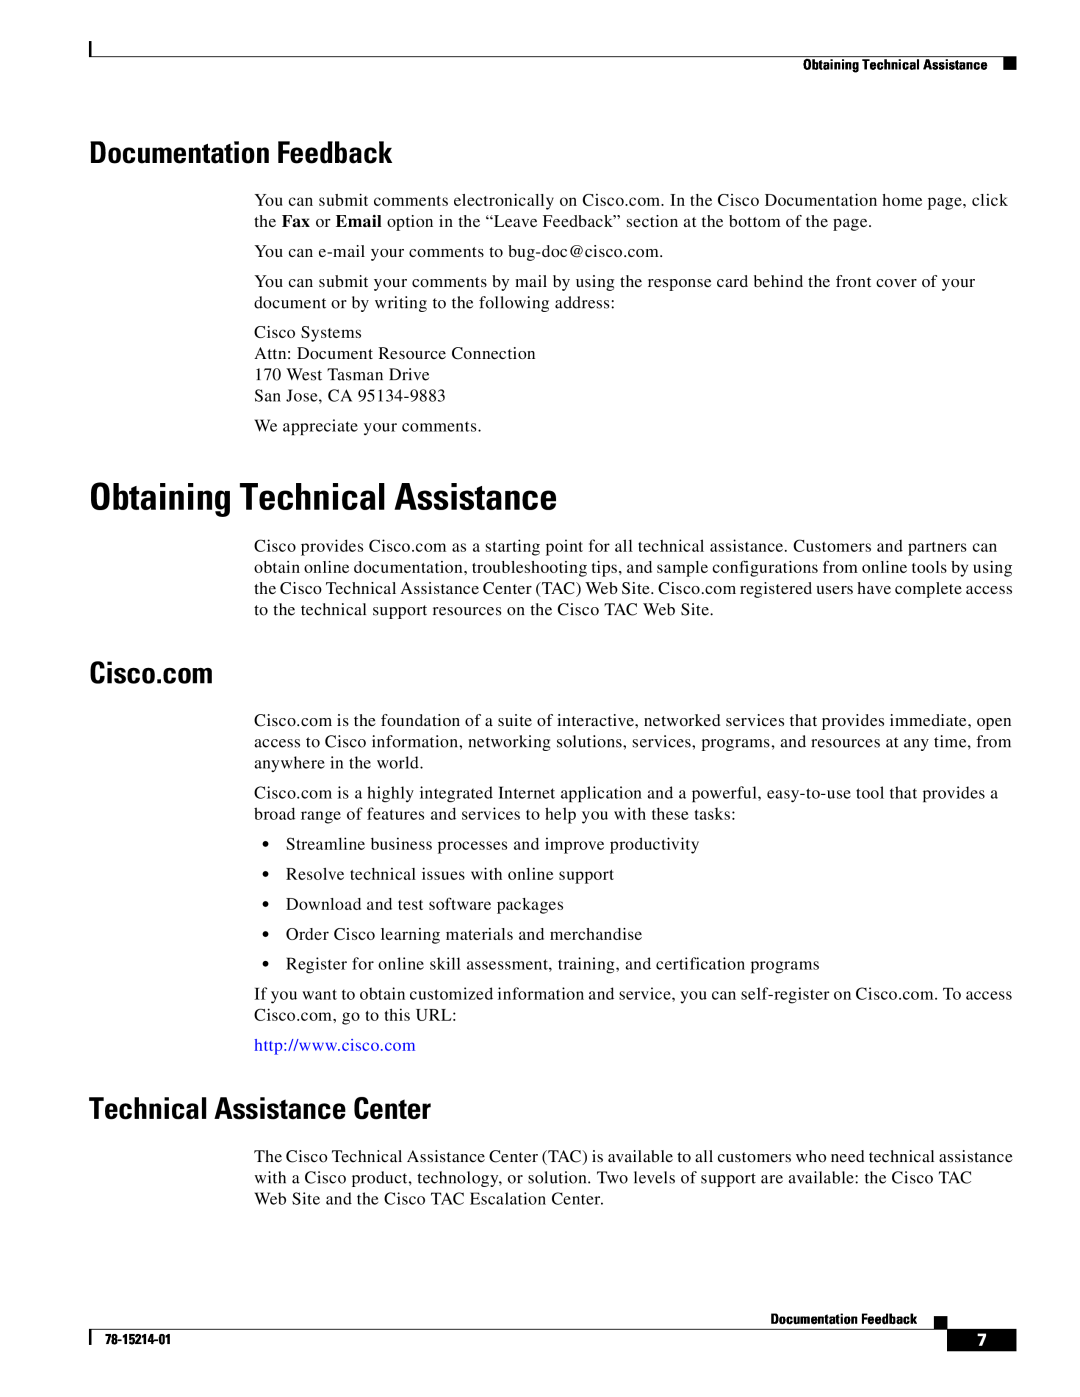 Cisco Systems WS-F4531 Obtaining Technical Assistance, Documentation Feedback, Cisco.com, Technical Assistance Center 